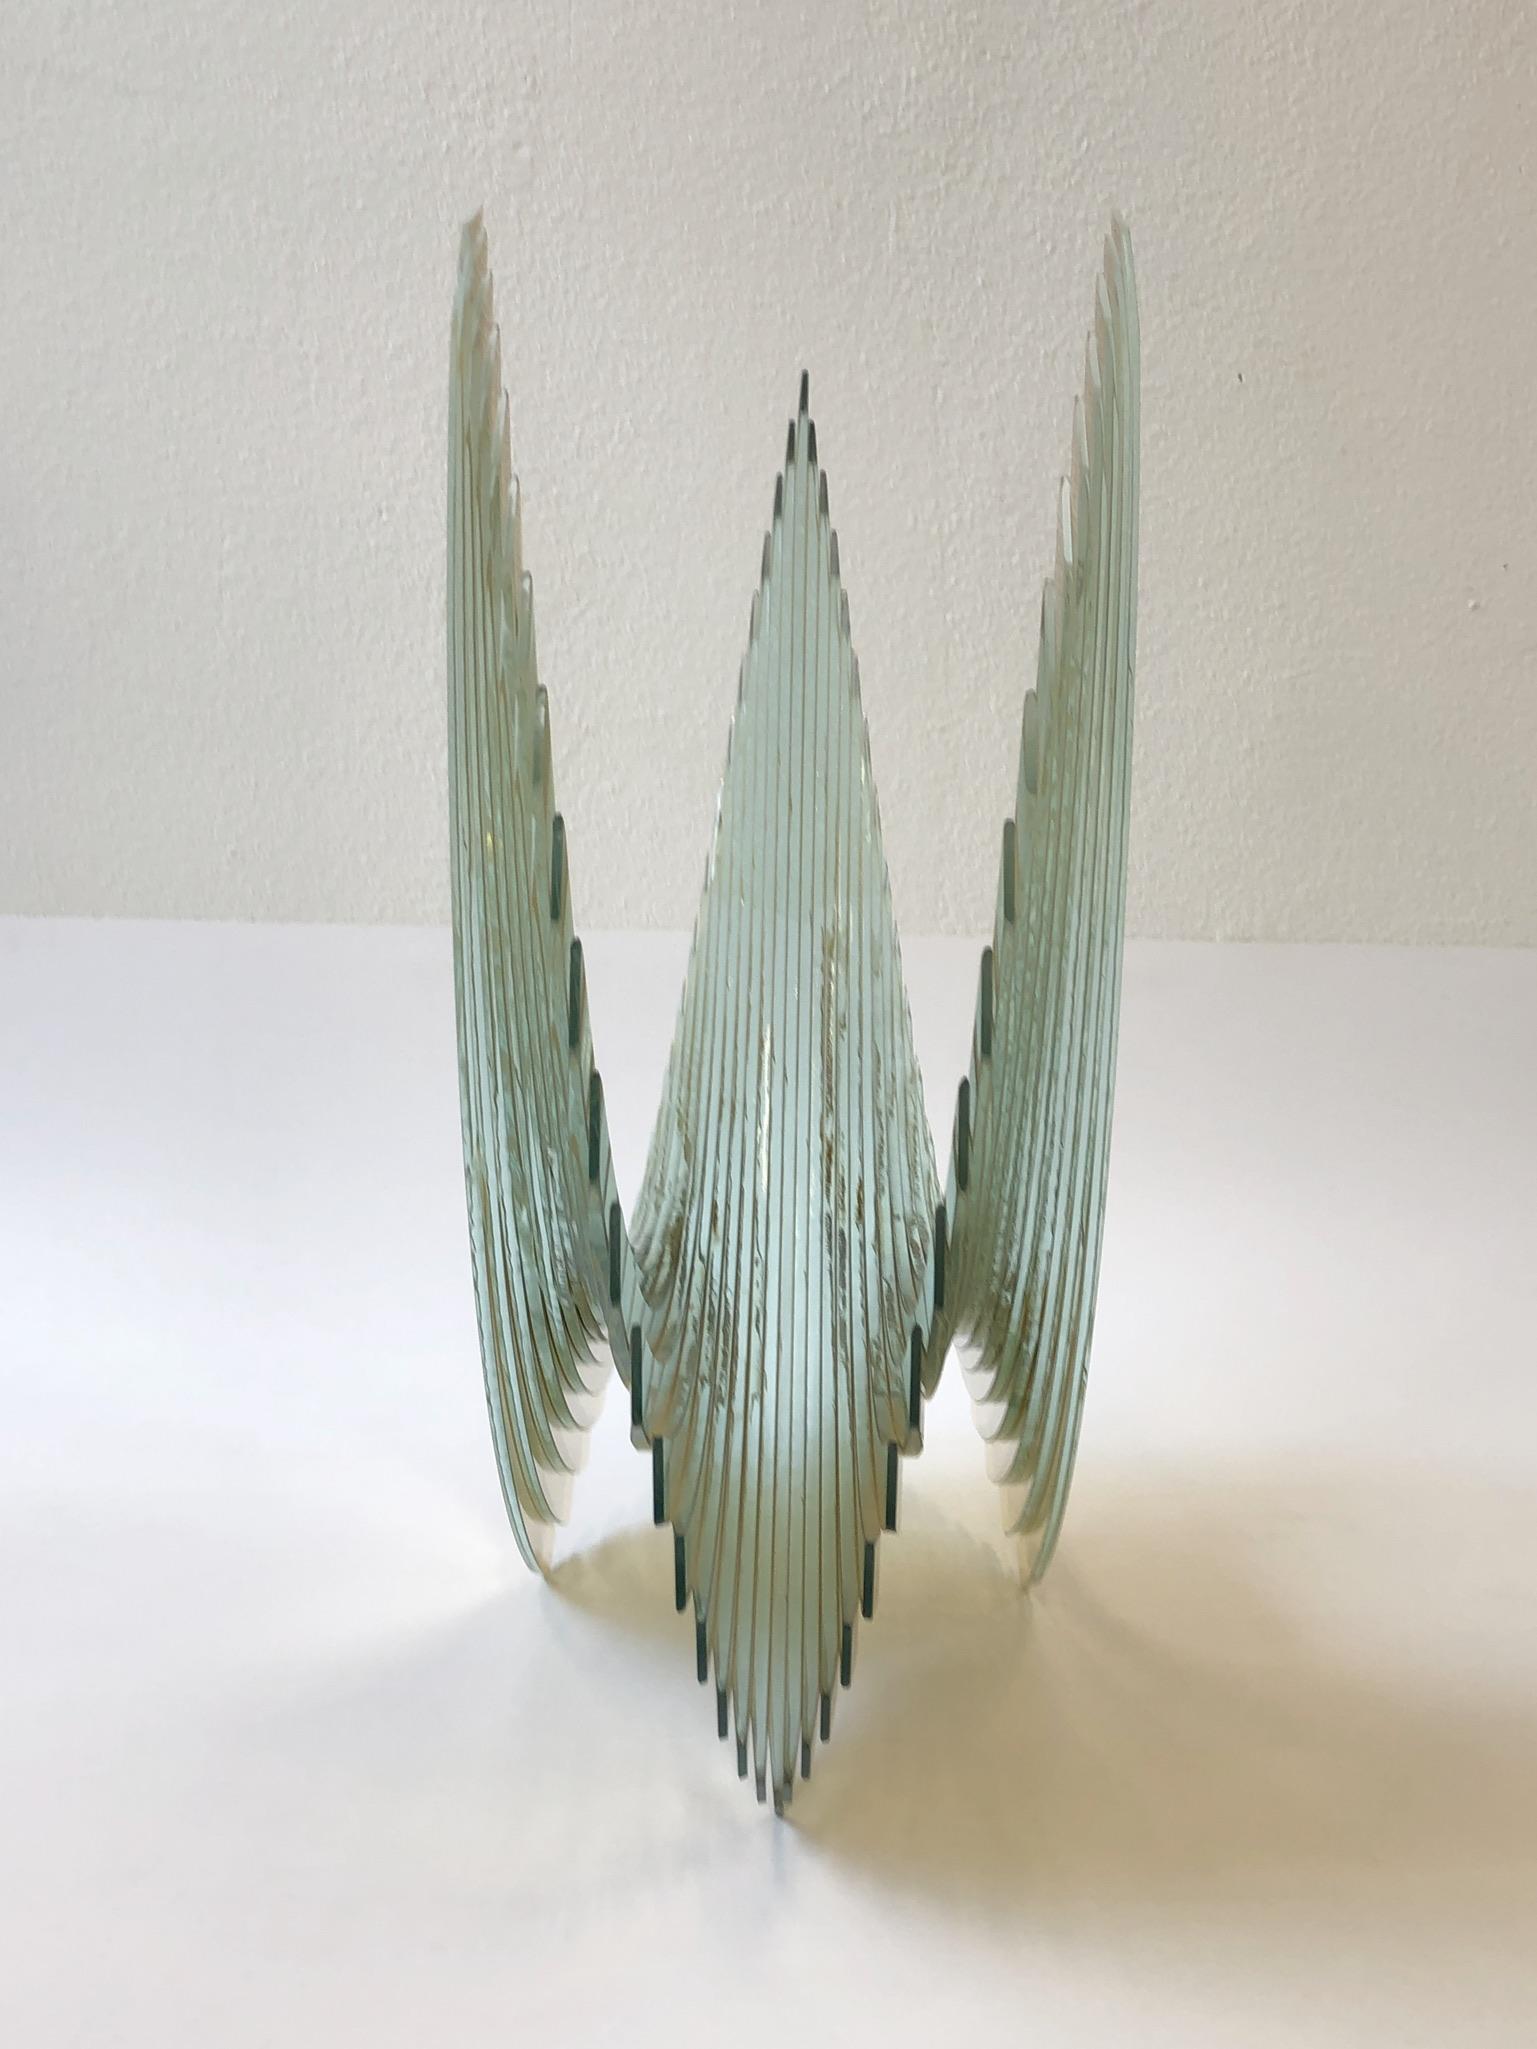 Amber Glass Sculpture by Tom Marosz 4